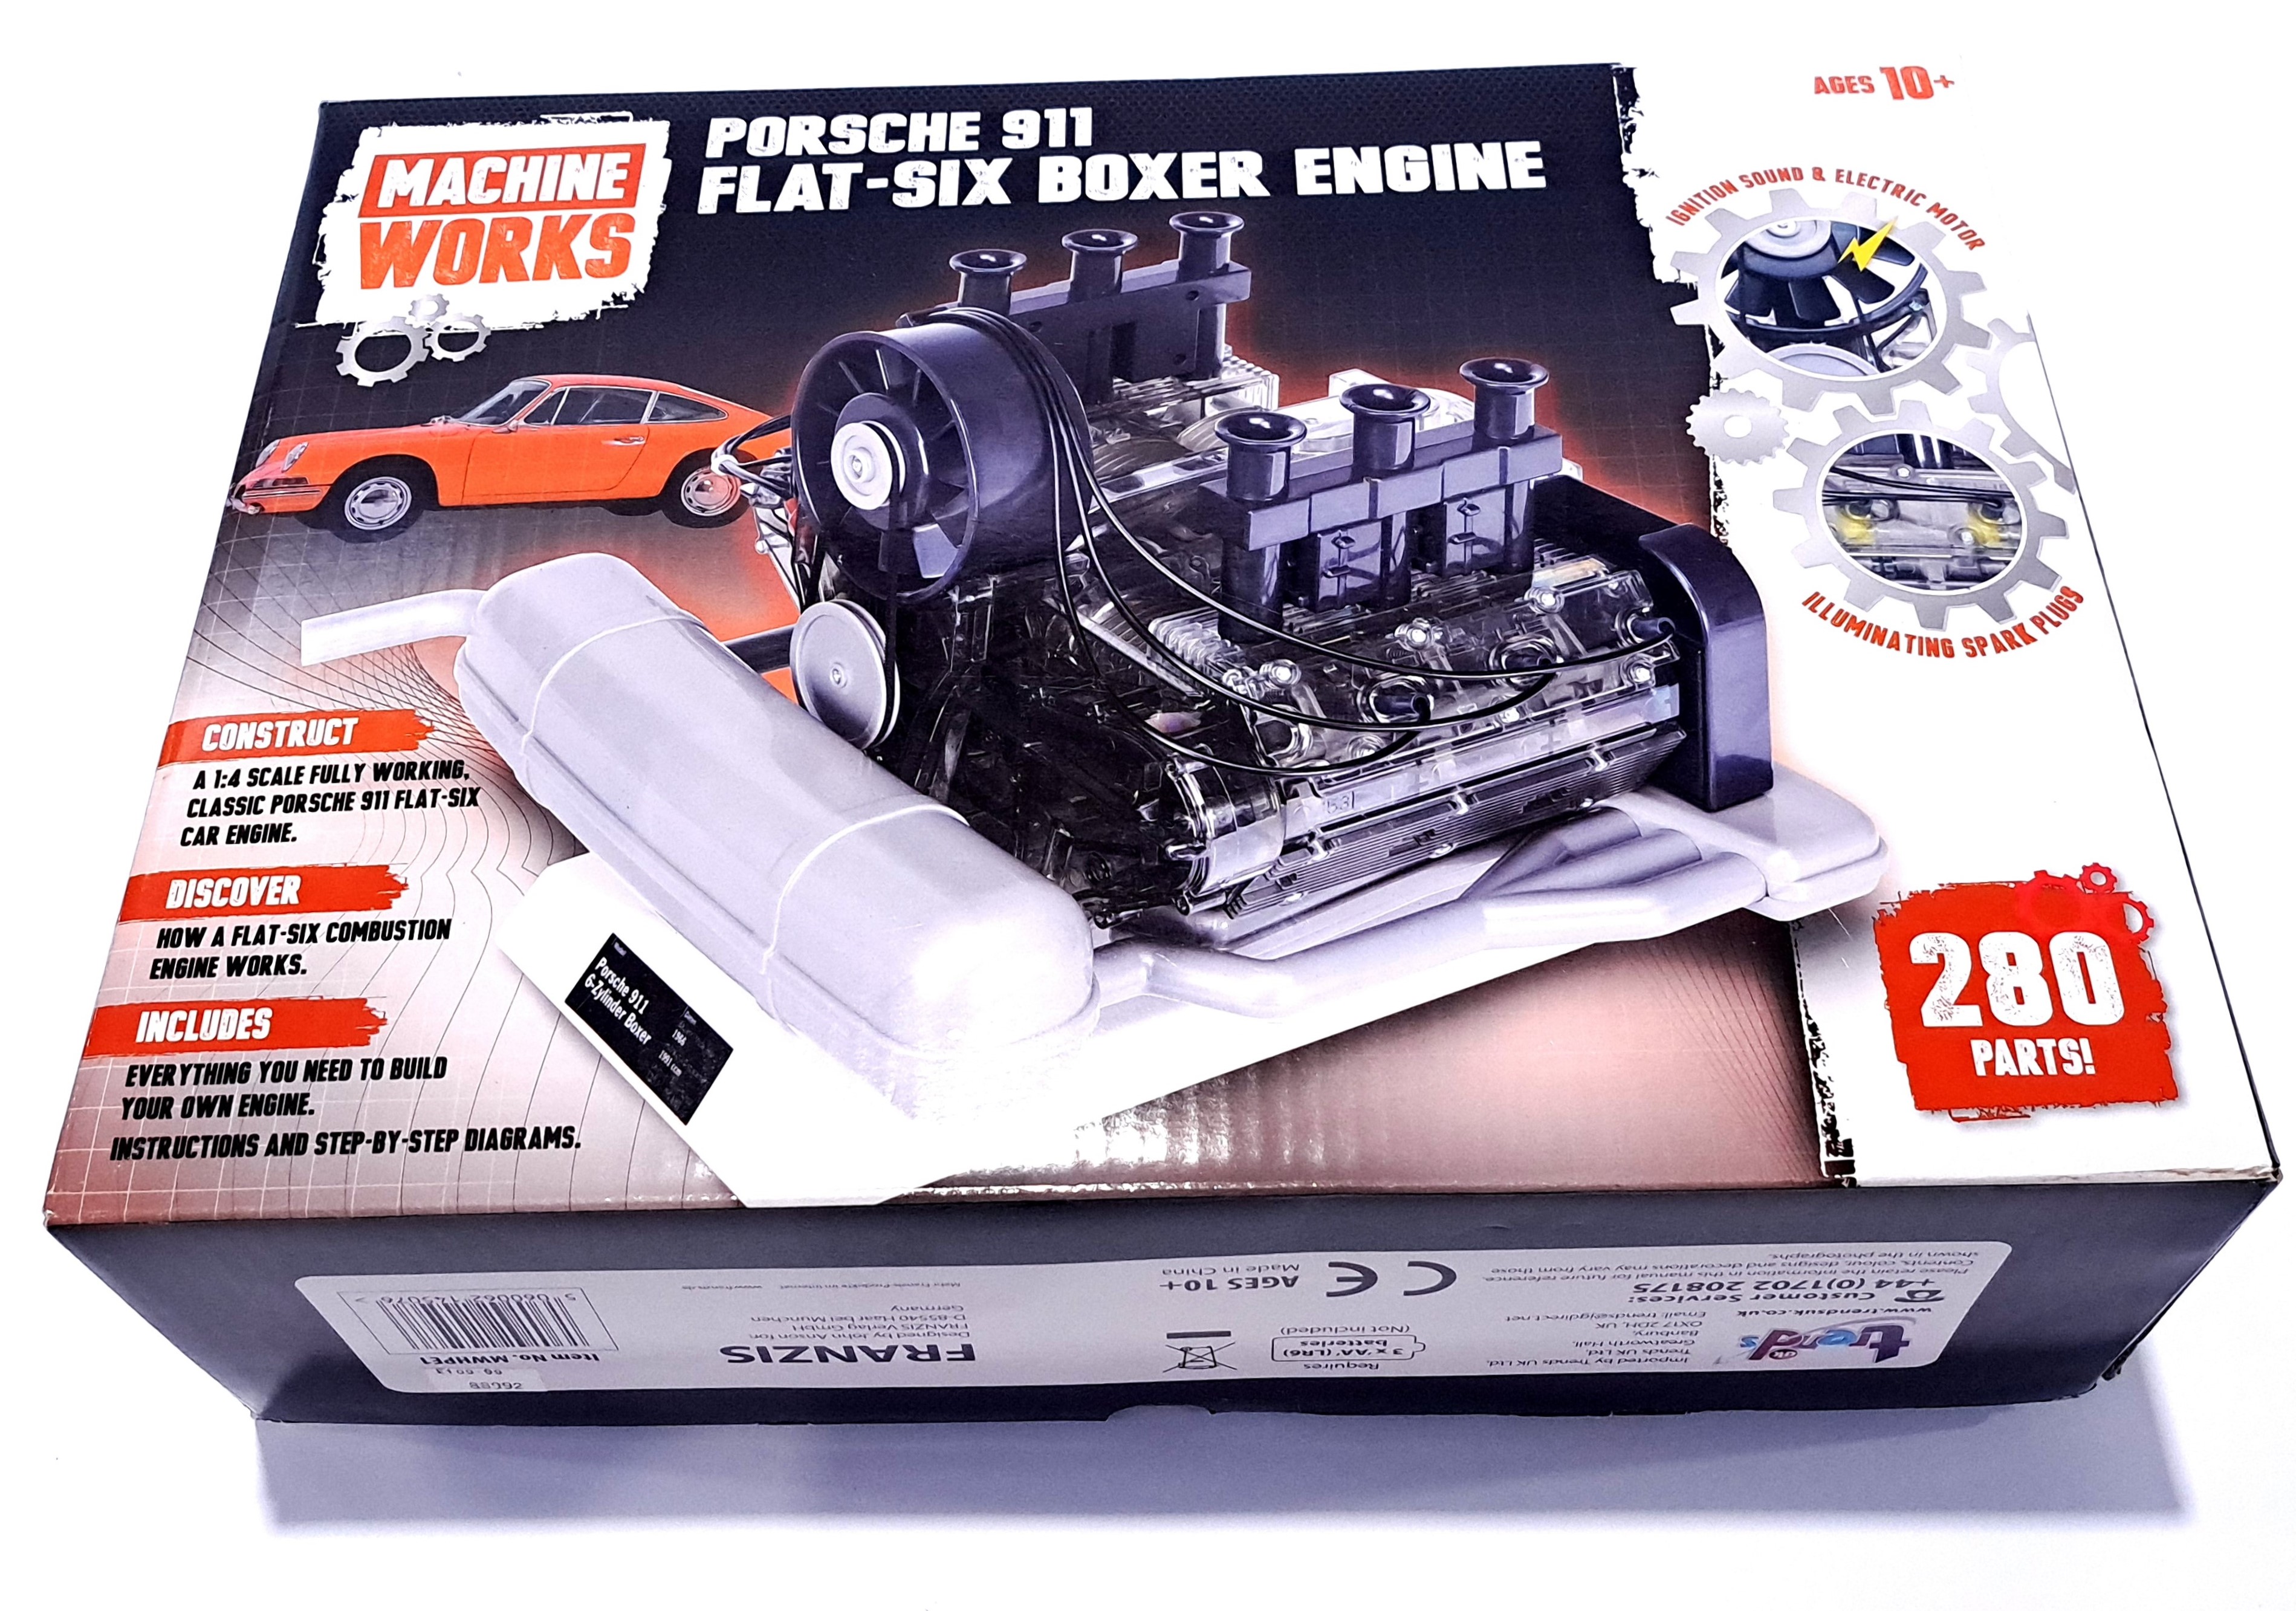 Machine Works Build Your Own Porsche 911 Boxer Engine Toy - Replica Model Building Kit - Features...